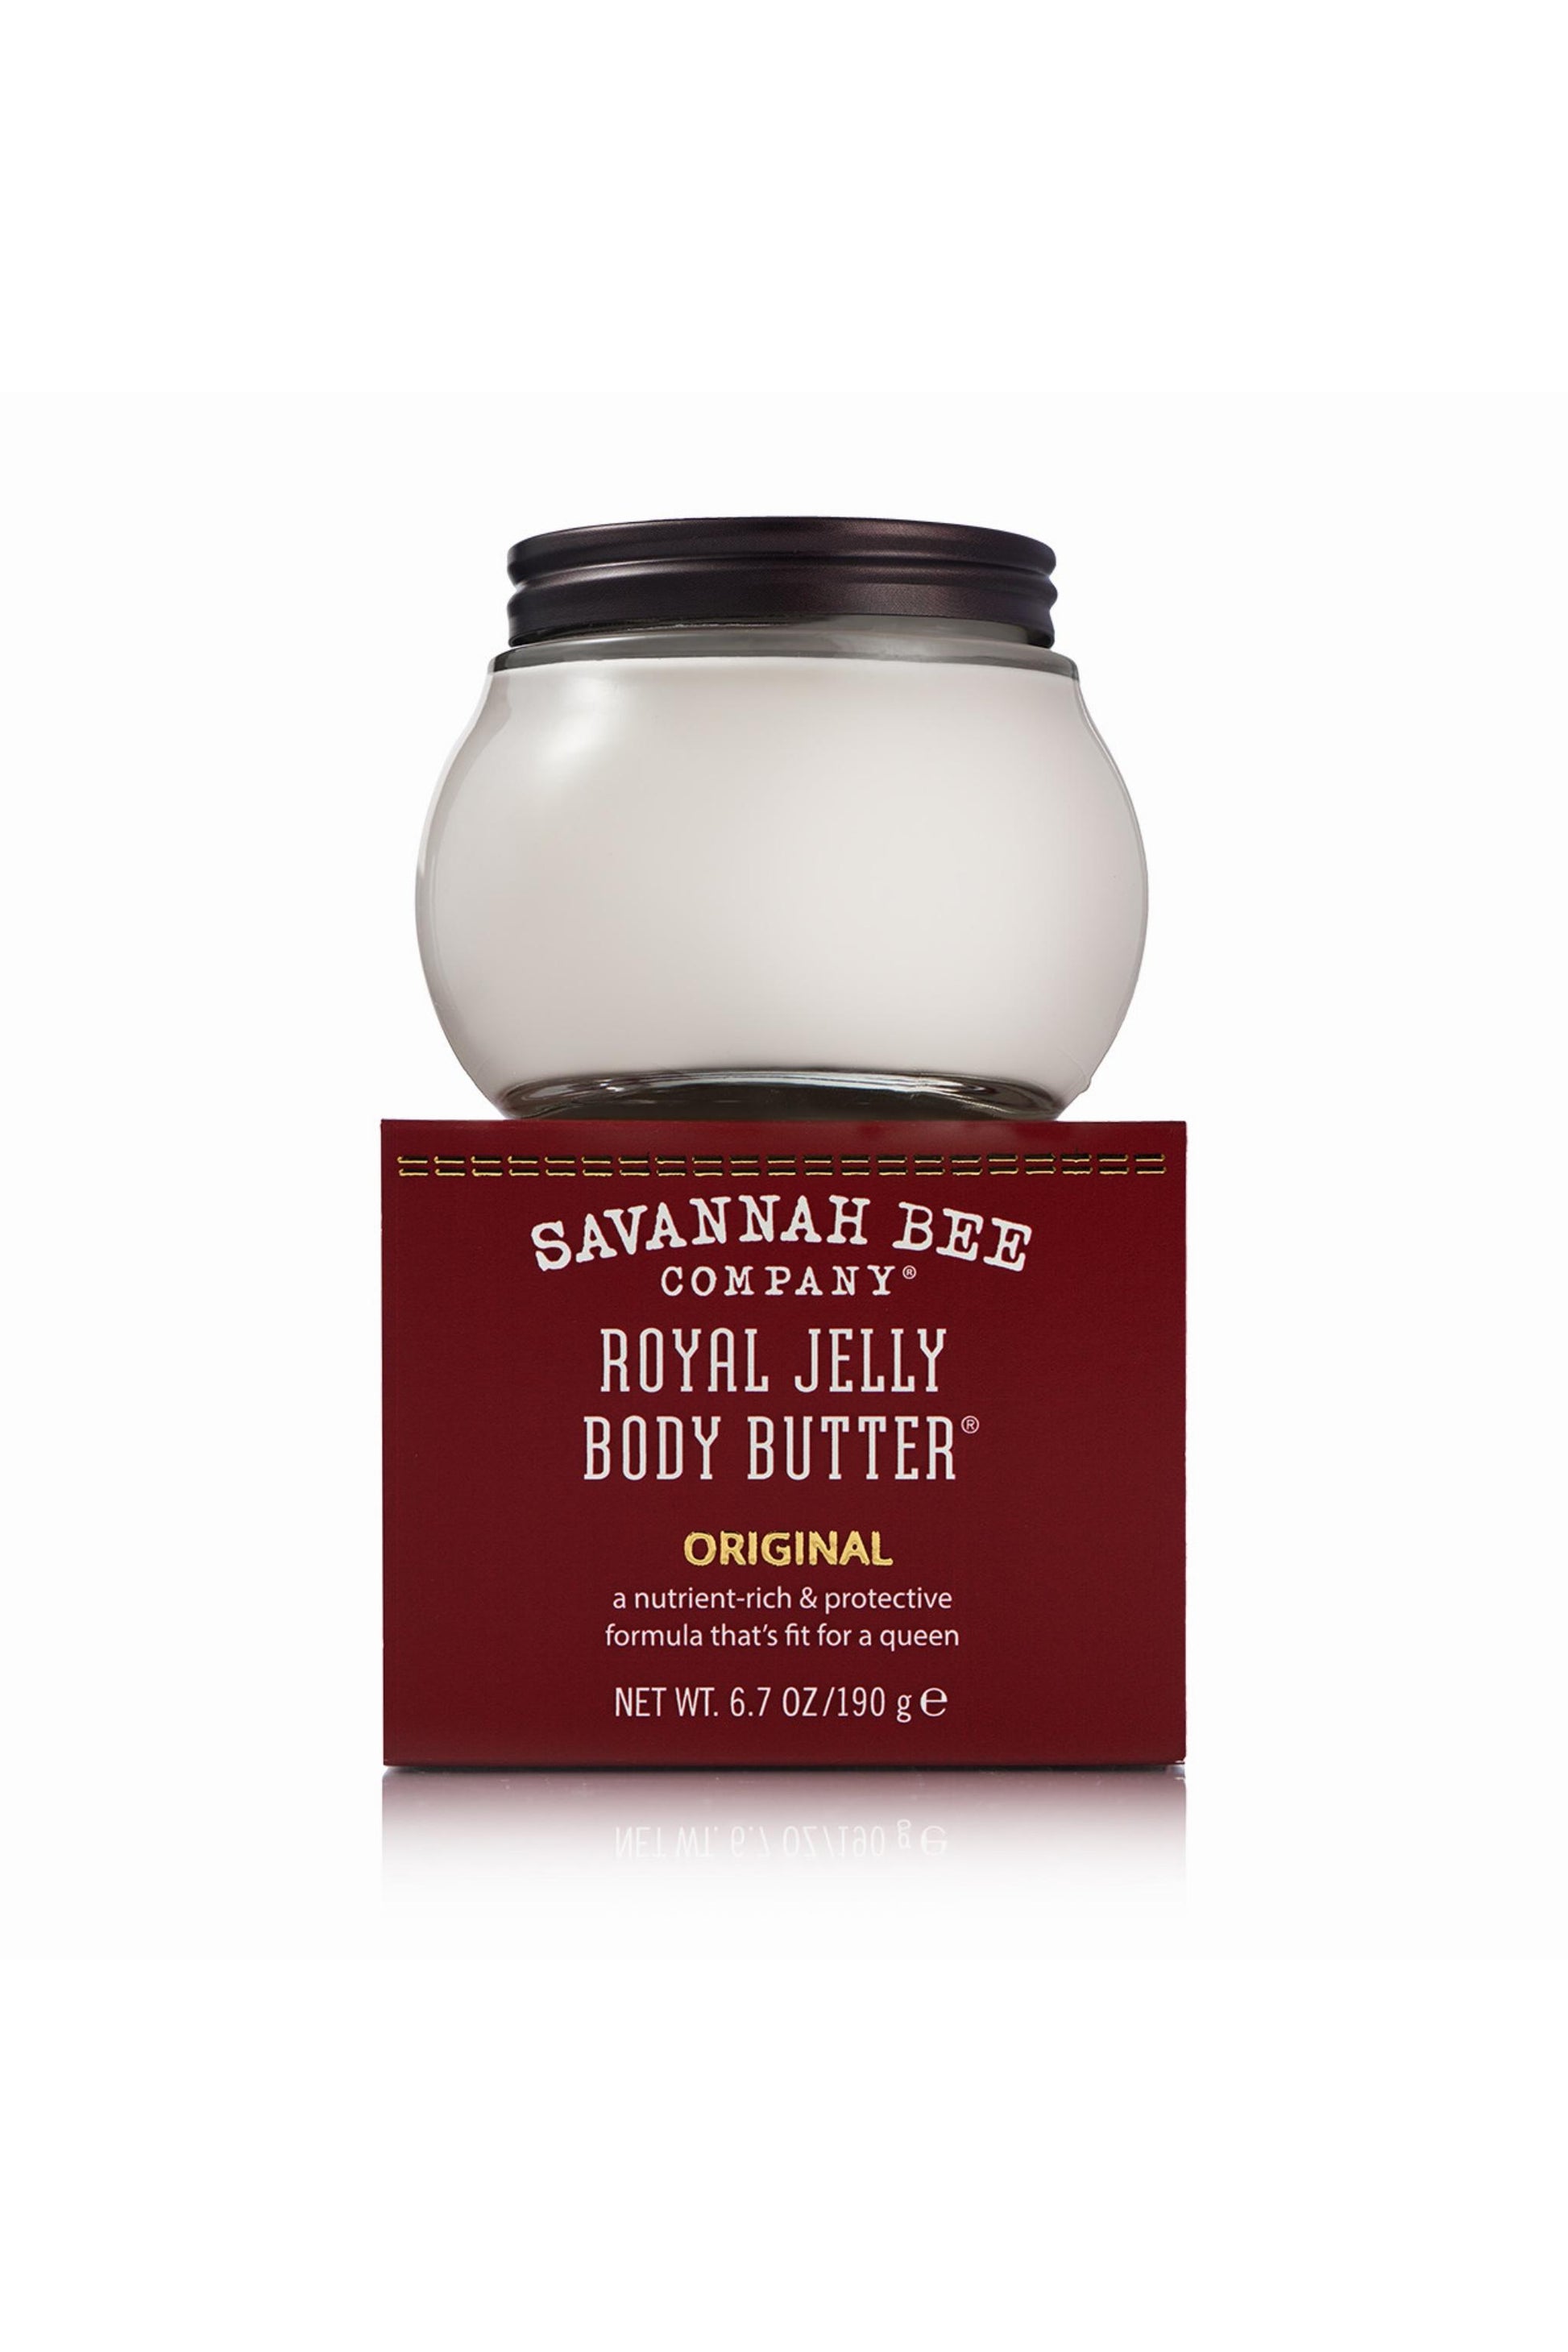 Royal Jelly Body Butter Original in a 6.7 oz. jar